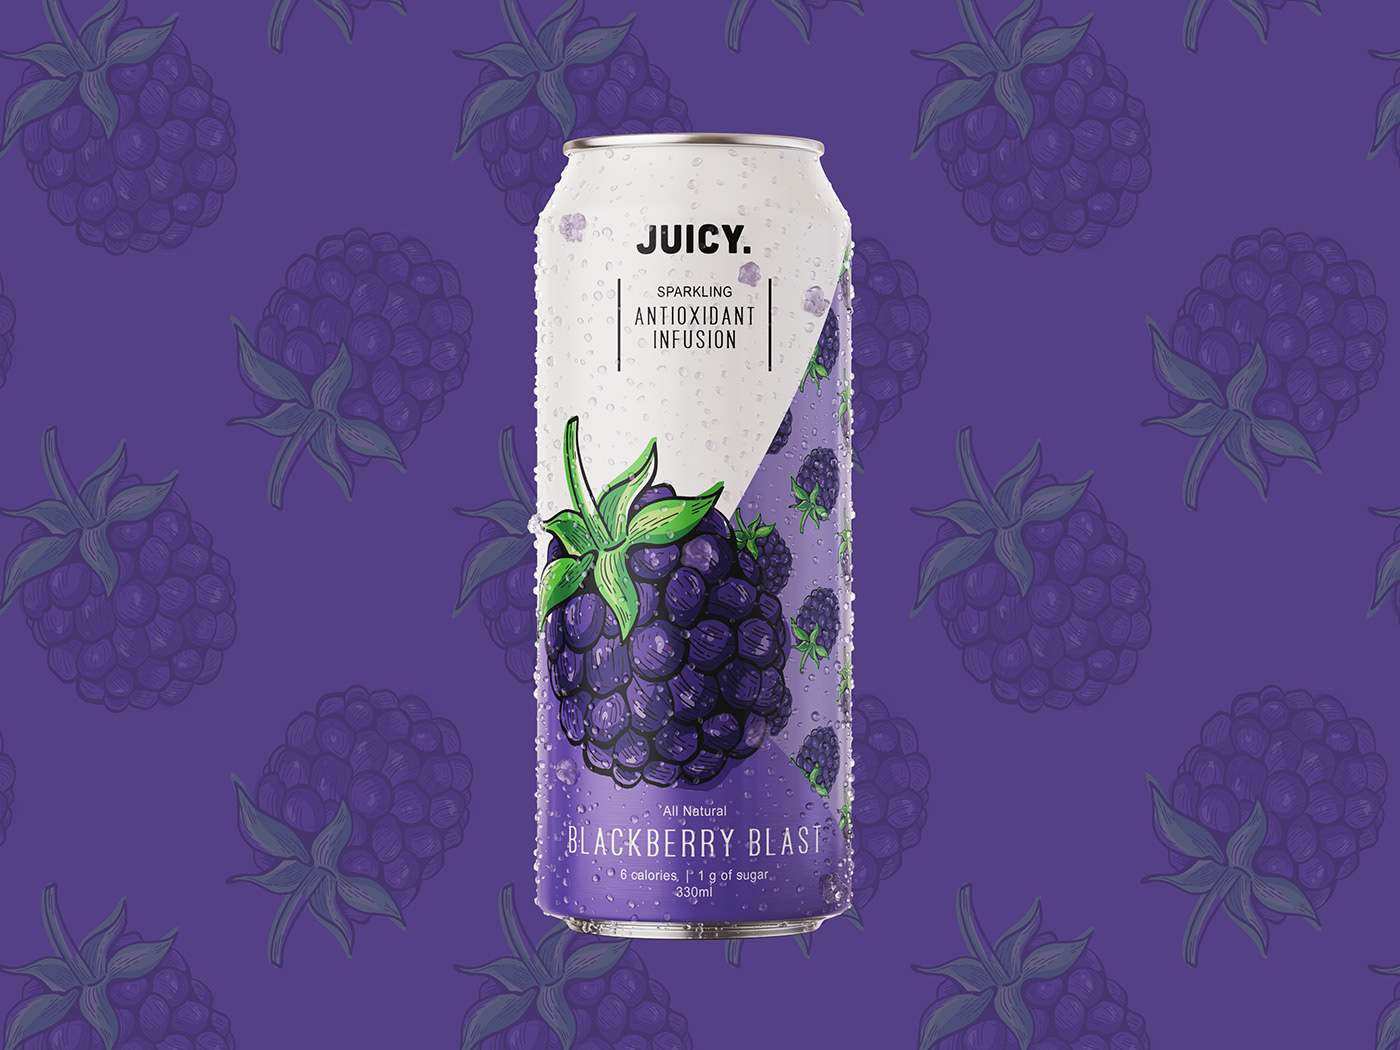 Blackberry illustration on label design for drink packaging by Juicy. Berry artwork on label. 